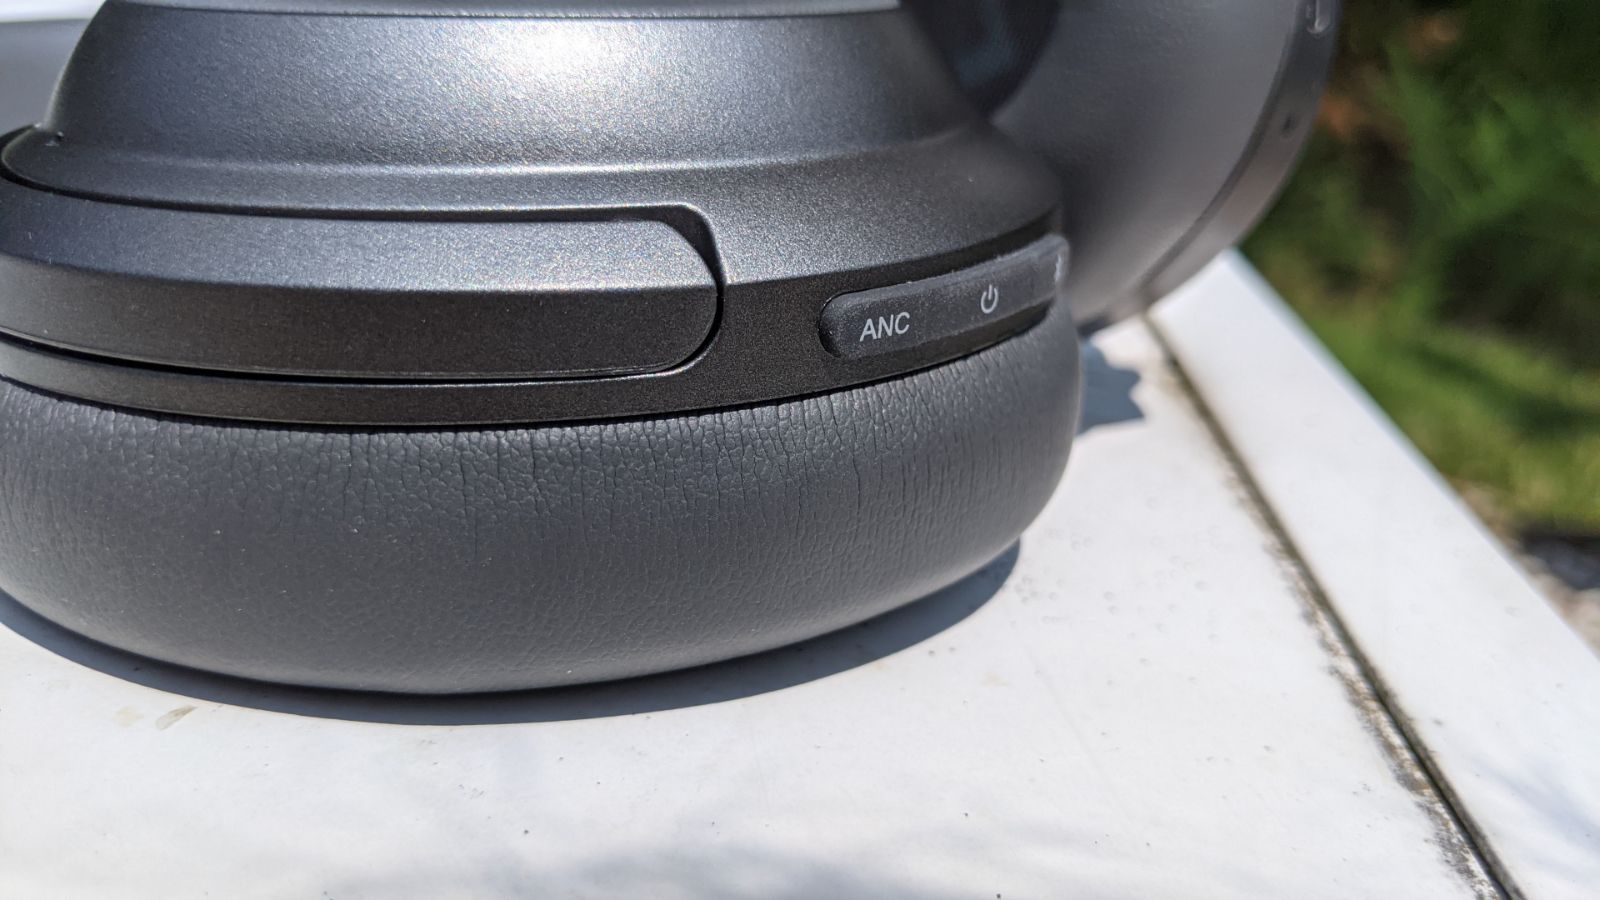 Close-up of Monoprice BT-600ANC headphones controls